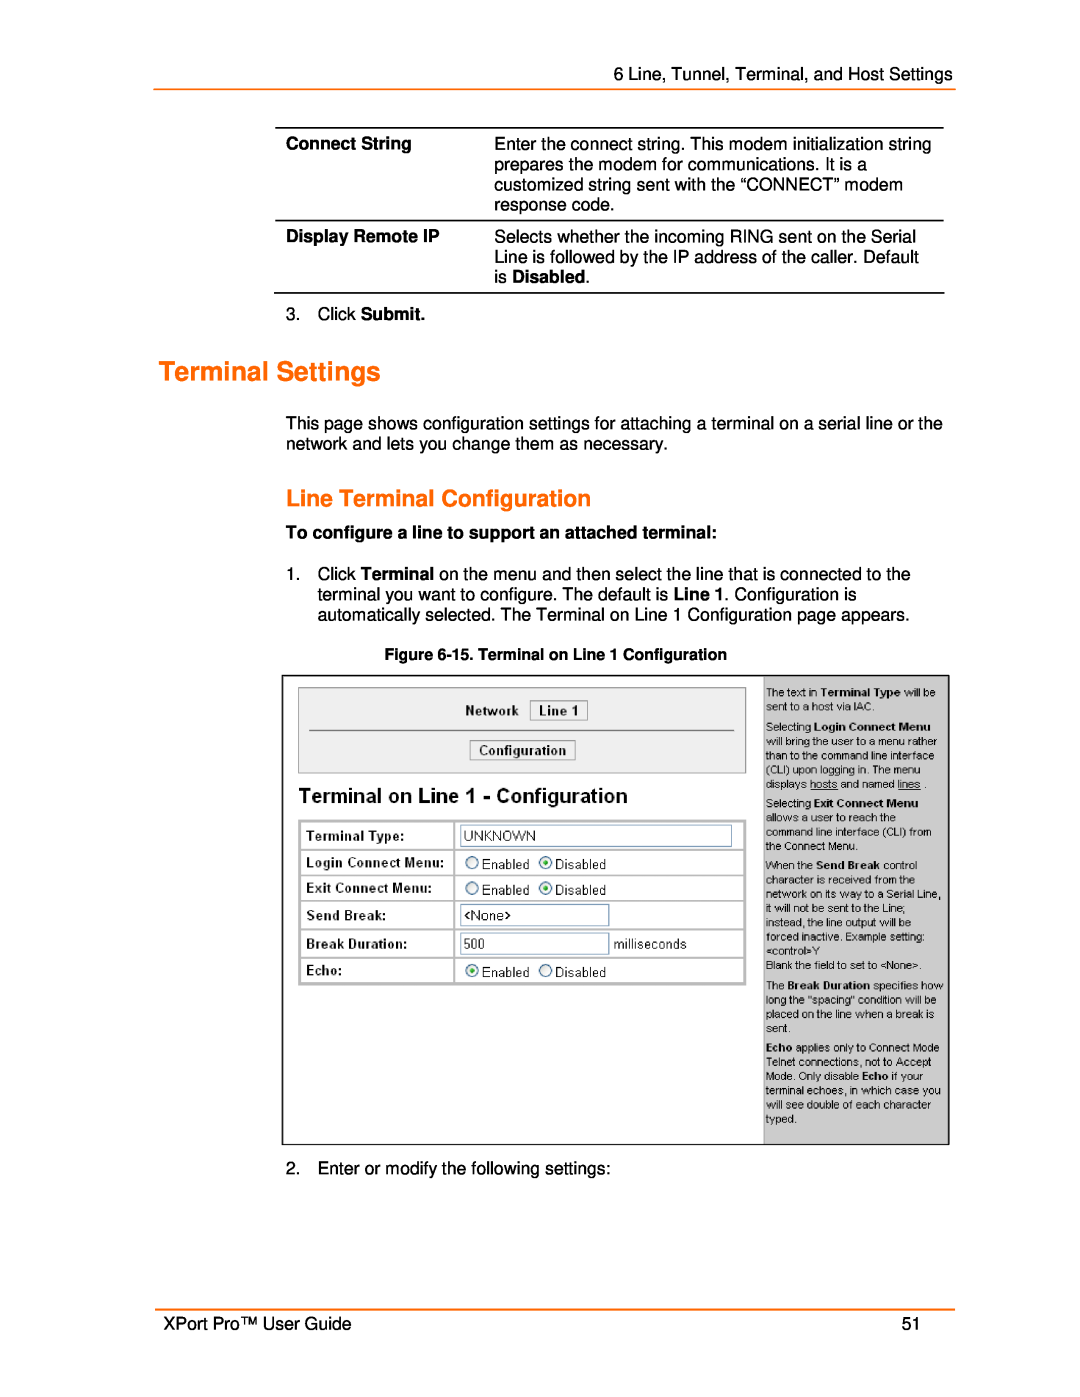 Lantronix 900-560 manual Terminal Settings, Line Terminal Configuration 